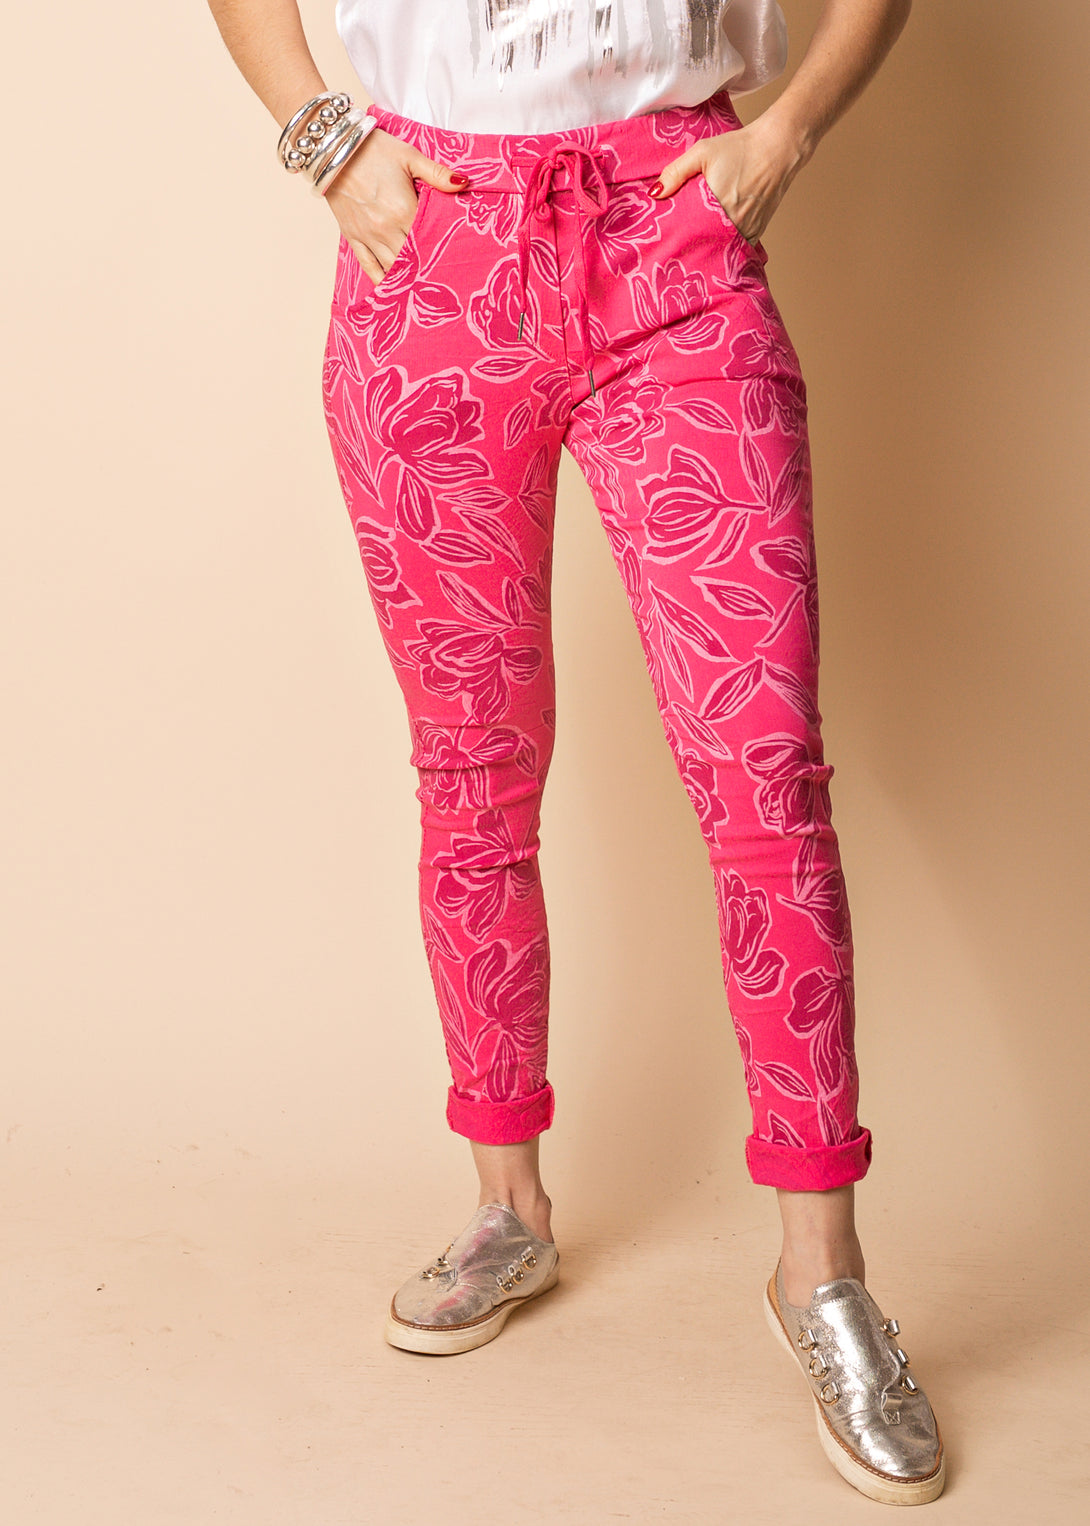 Cali Pants in Raspberry Sorbet - Imagine Fashion